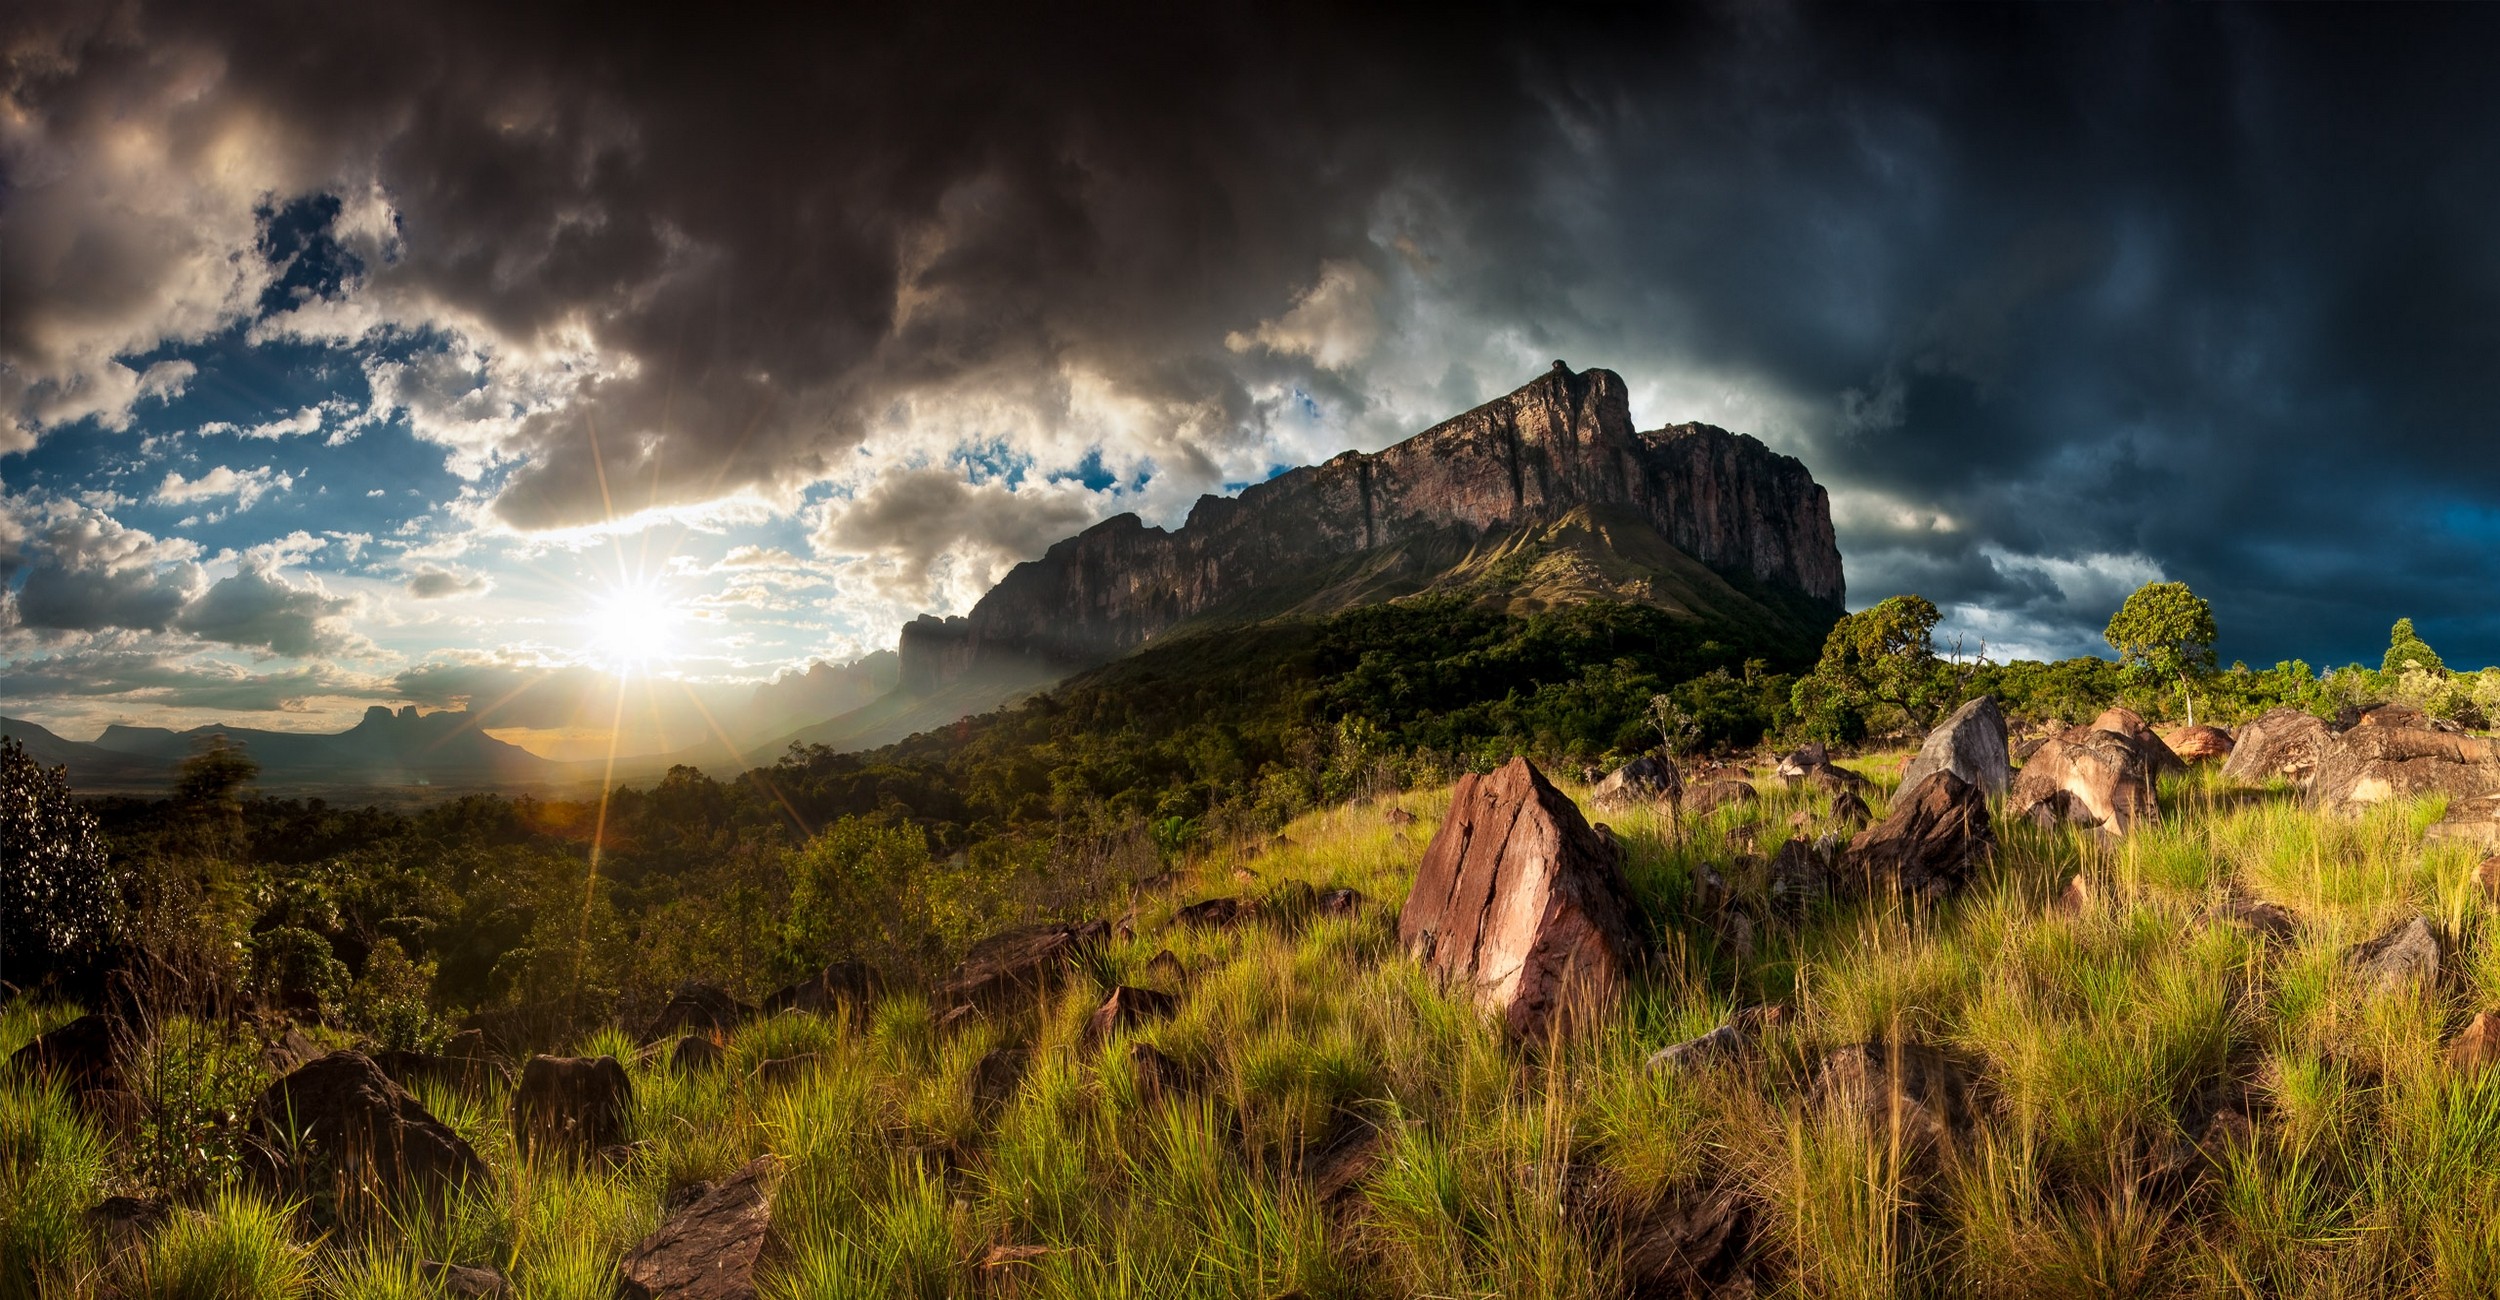 Nature Landscape Mountains Grass Clouds Sunset Trees Shrubs Sky Sun Rays Venezuela HDR Lens Flare Cl 2500x1300